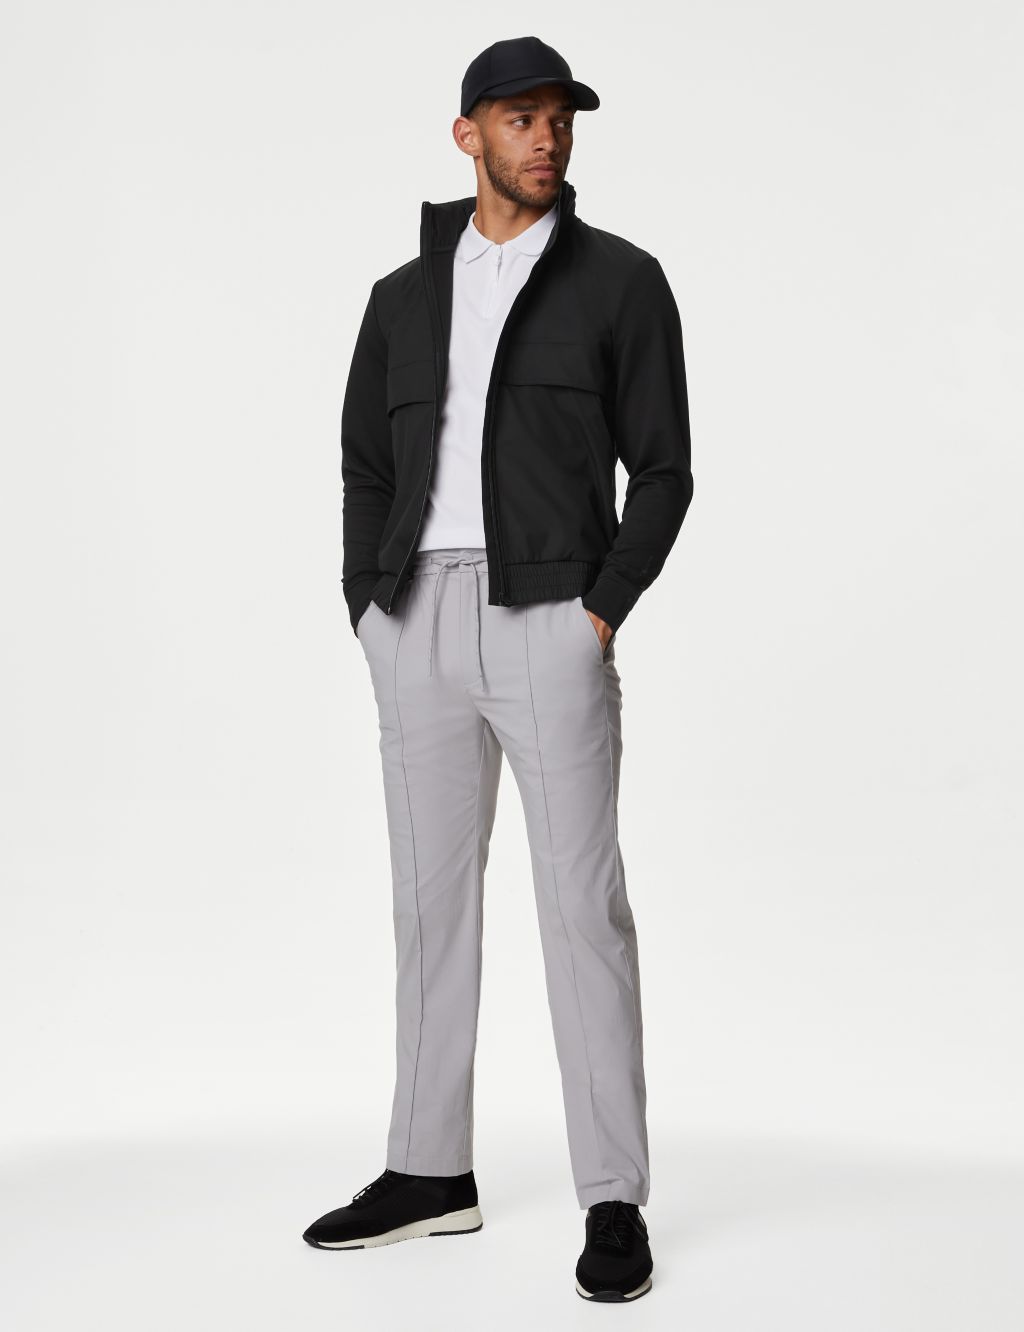 Packaway Hood Zip Up Jacket with Stormwear™ 3 of 7